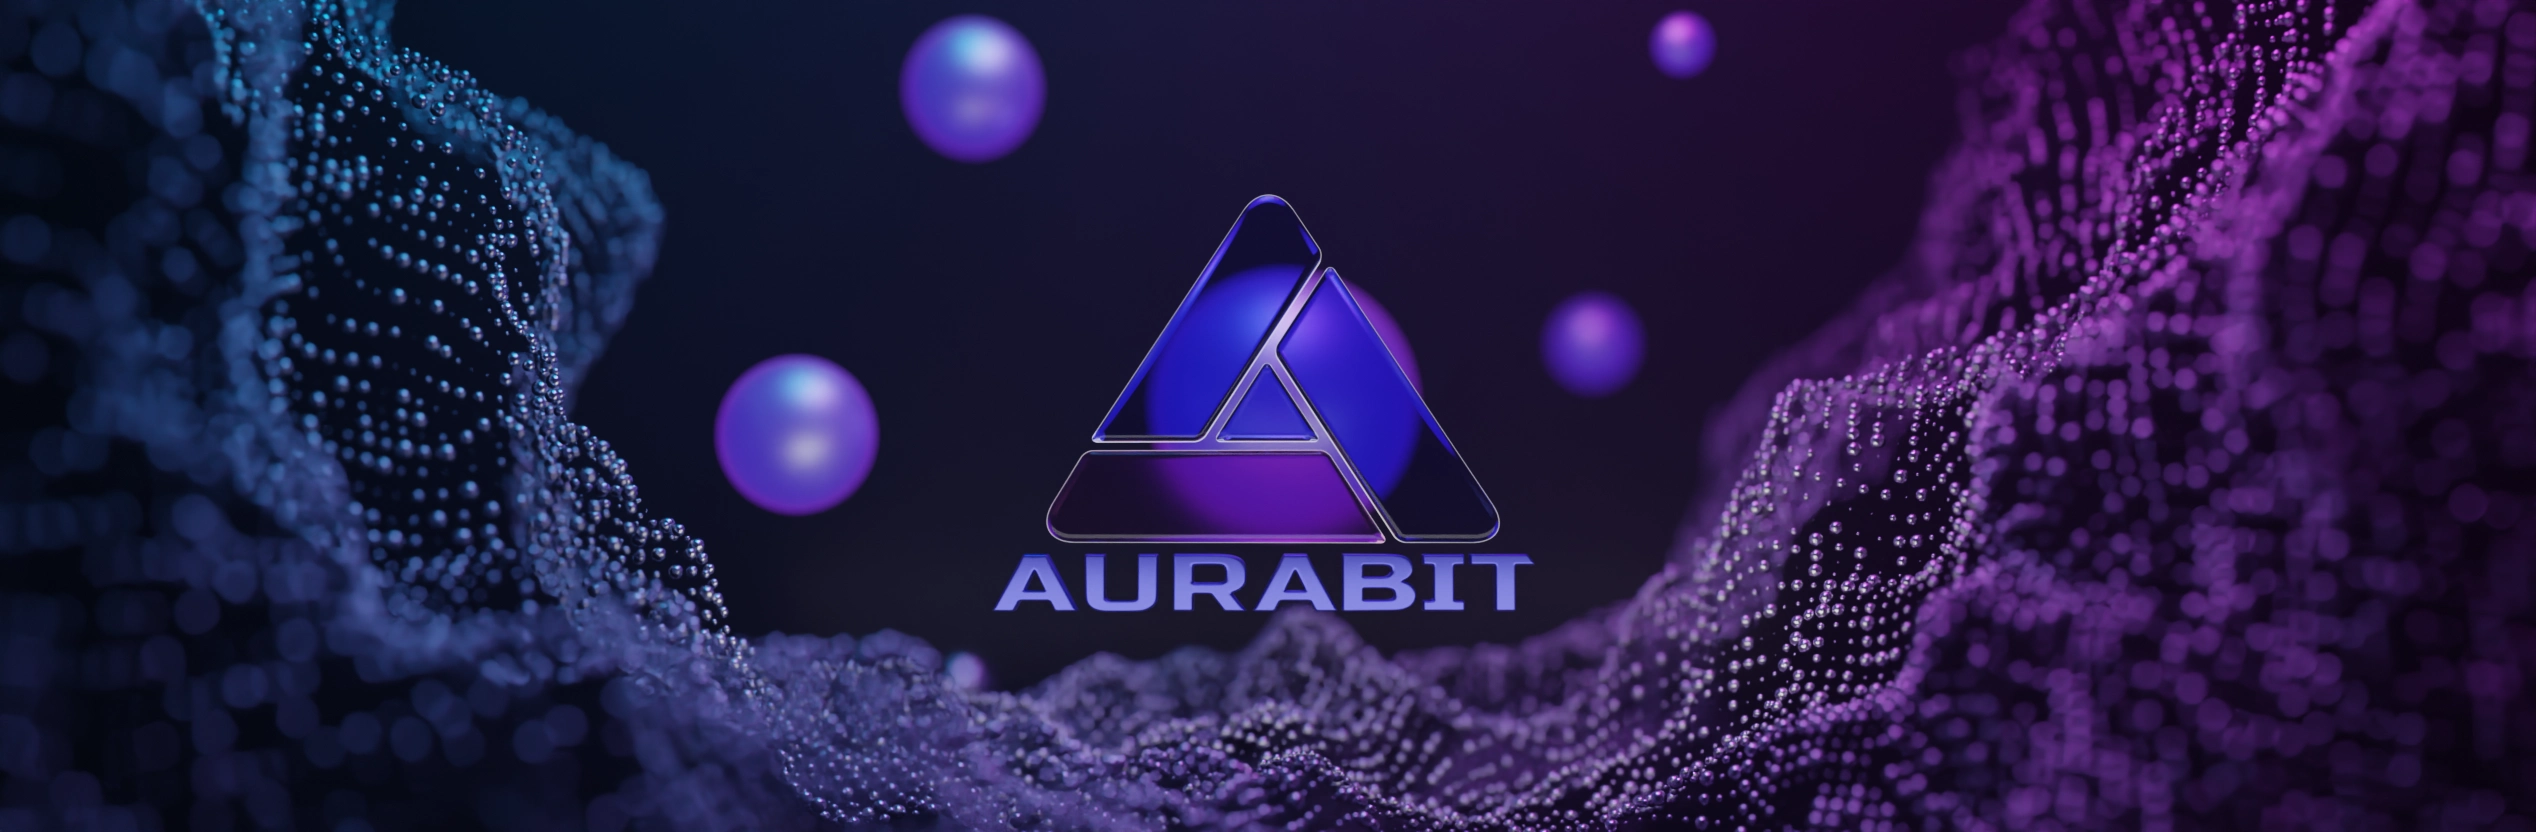 Aurabit Website Terms of Use